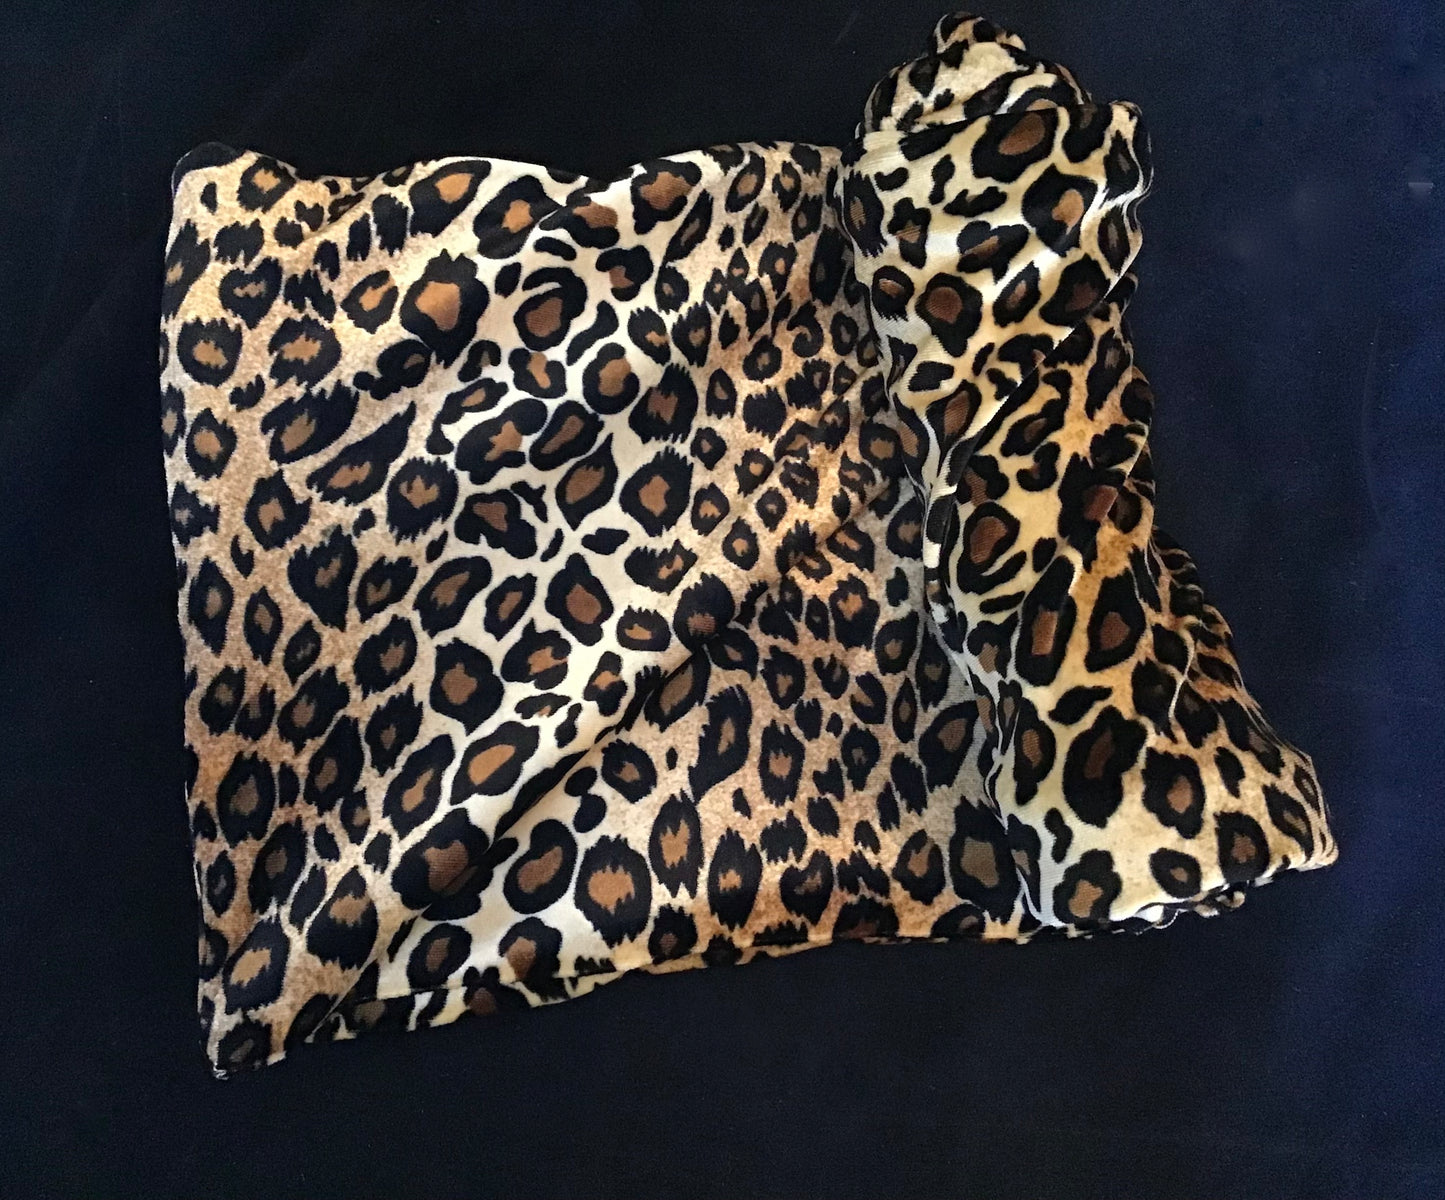 Leopard print velvet in classic colors